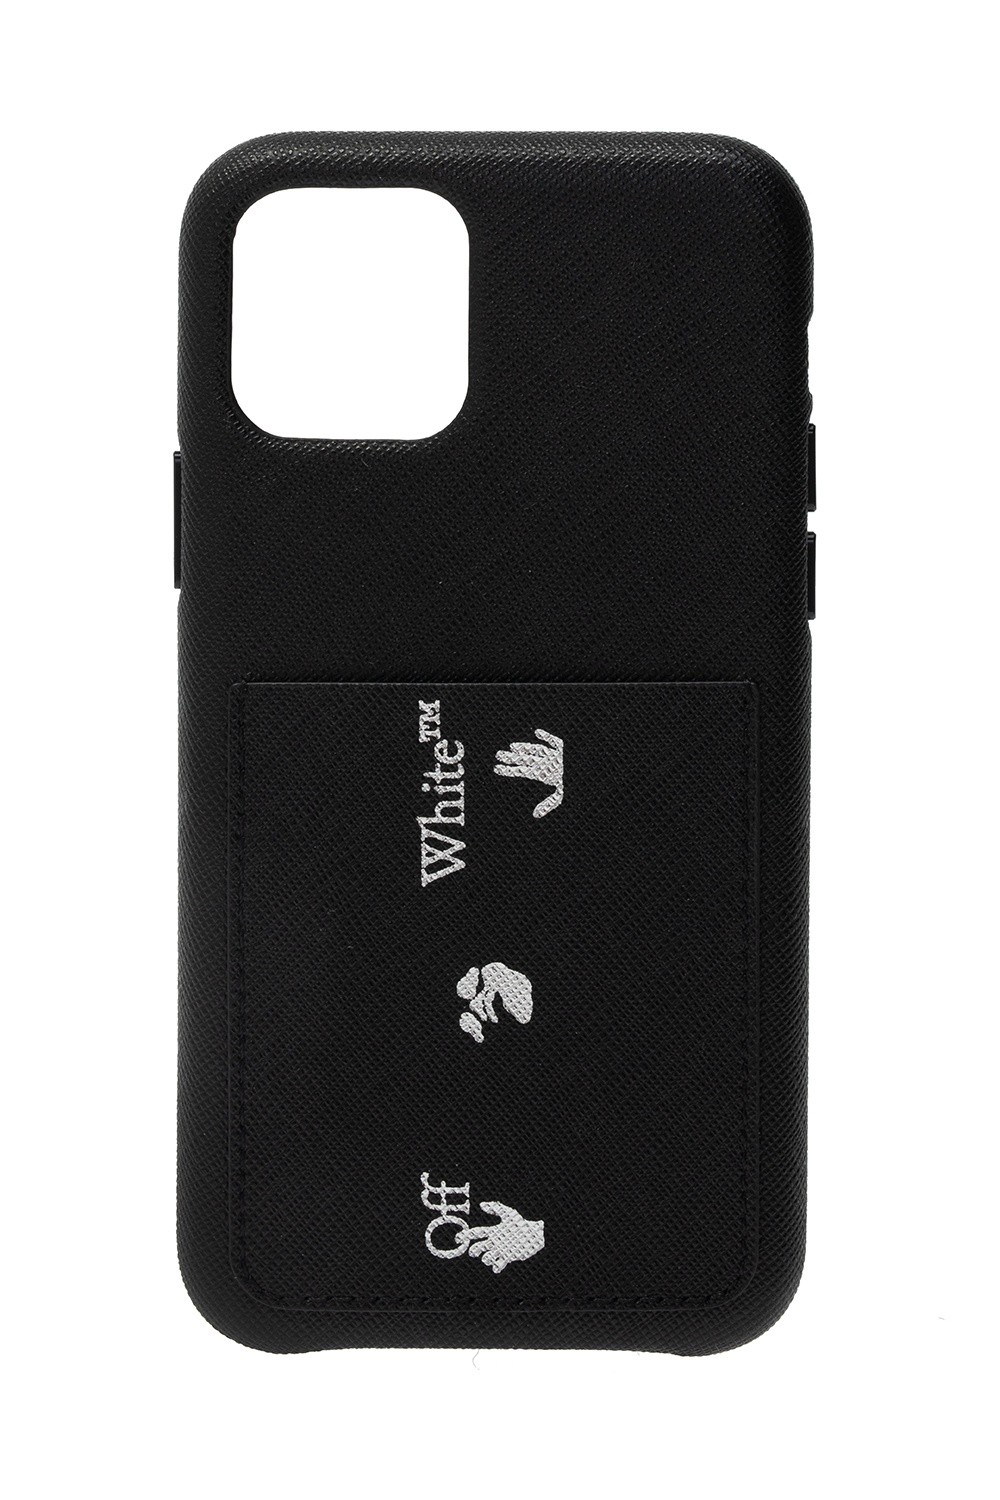 Off-White iPhone 11 Pro Max case | Men's Accessorie | Vitkac